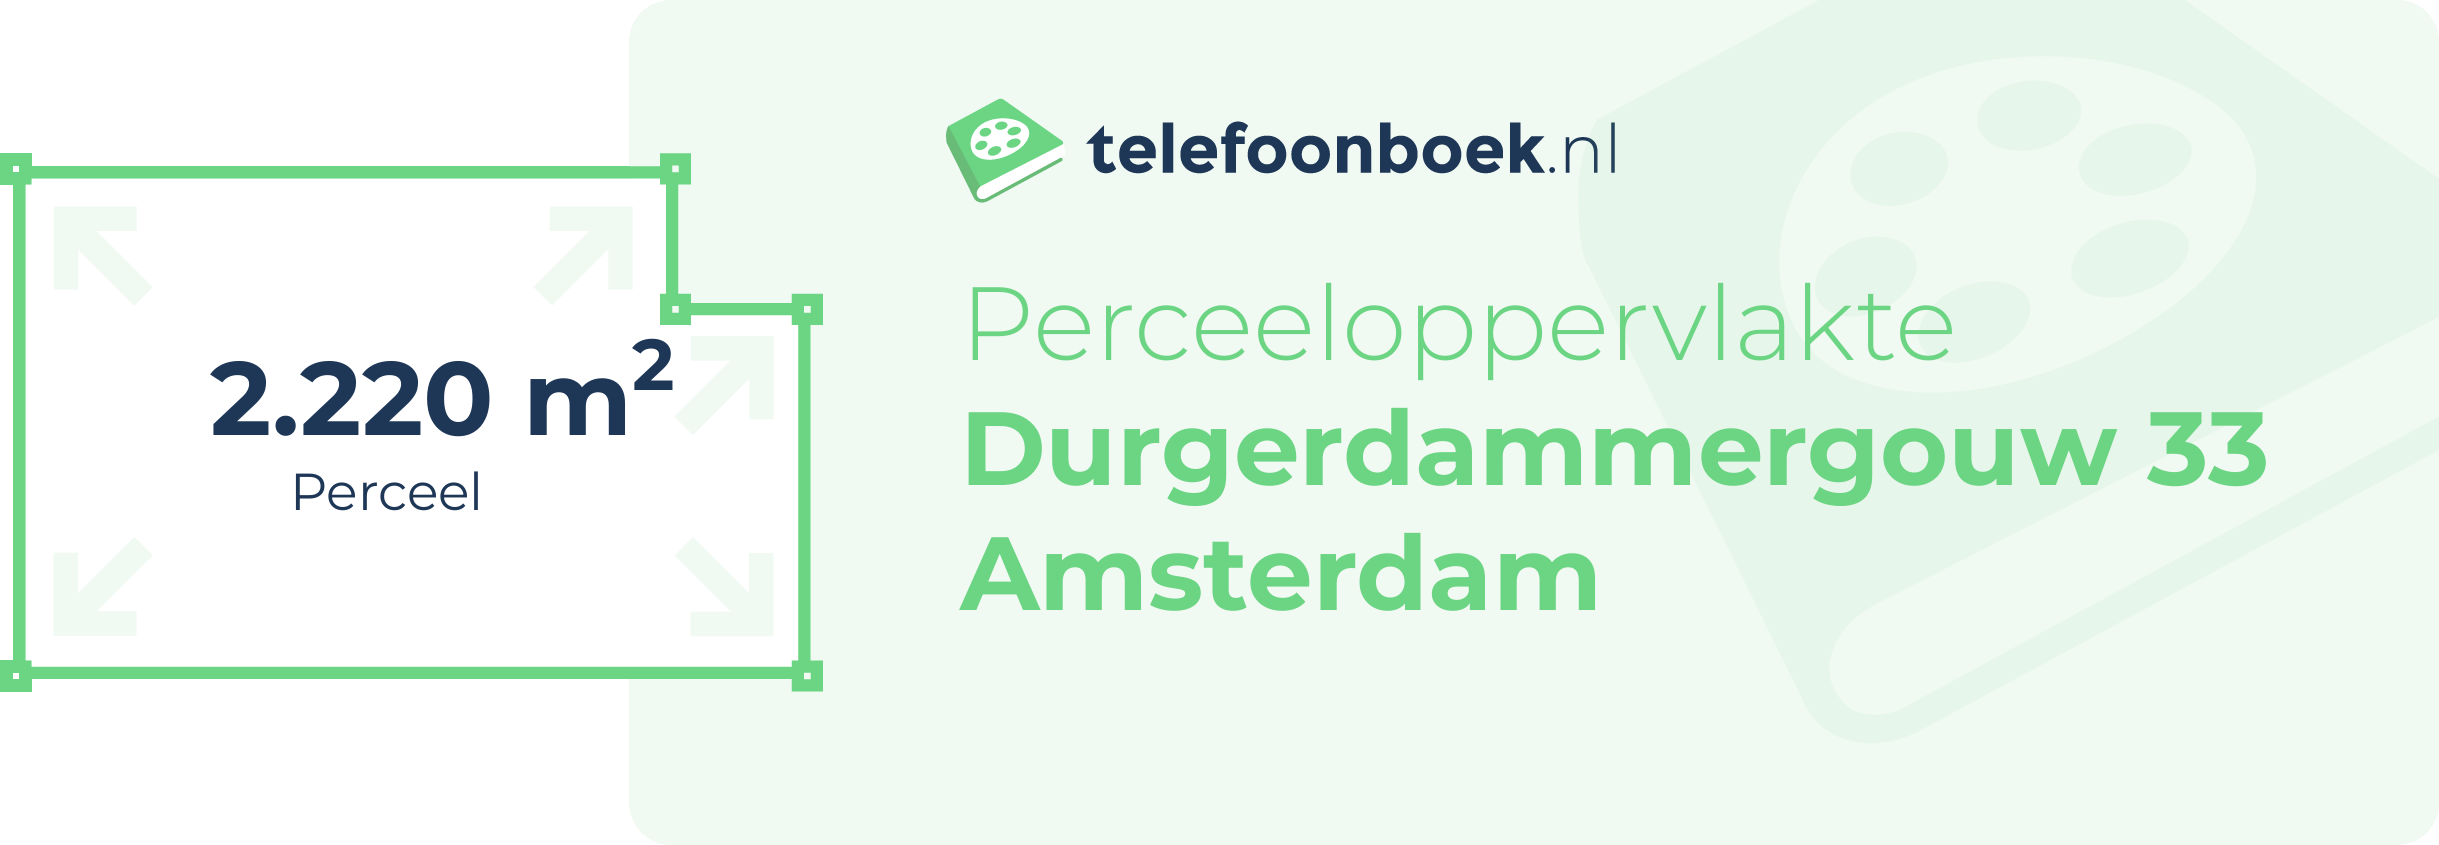 Perceeloppervlakte Durgerdammergouw 33 Amsterdam